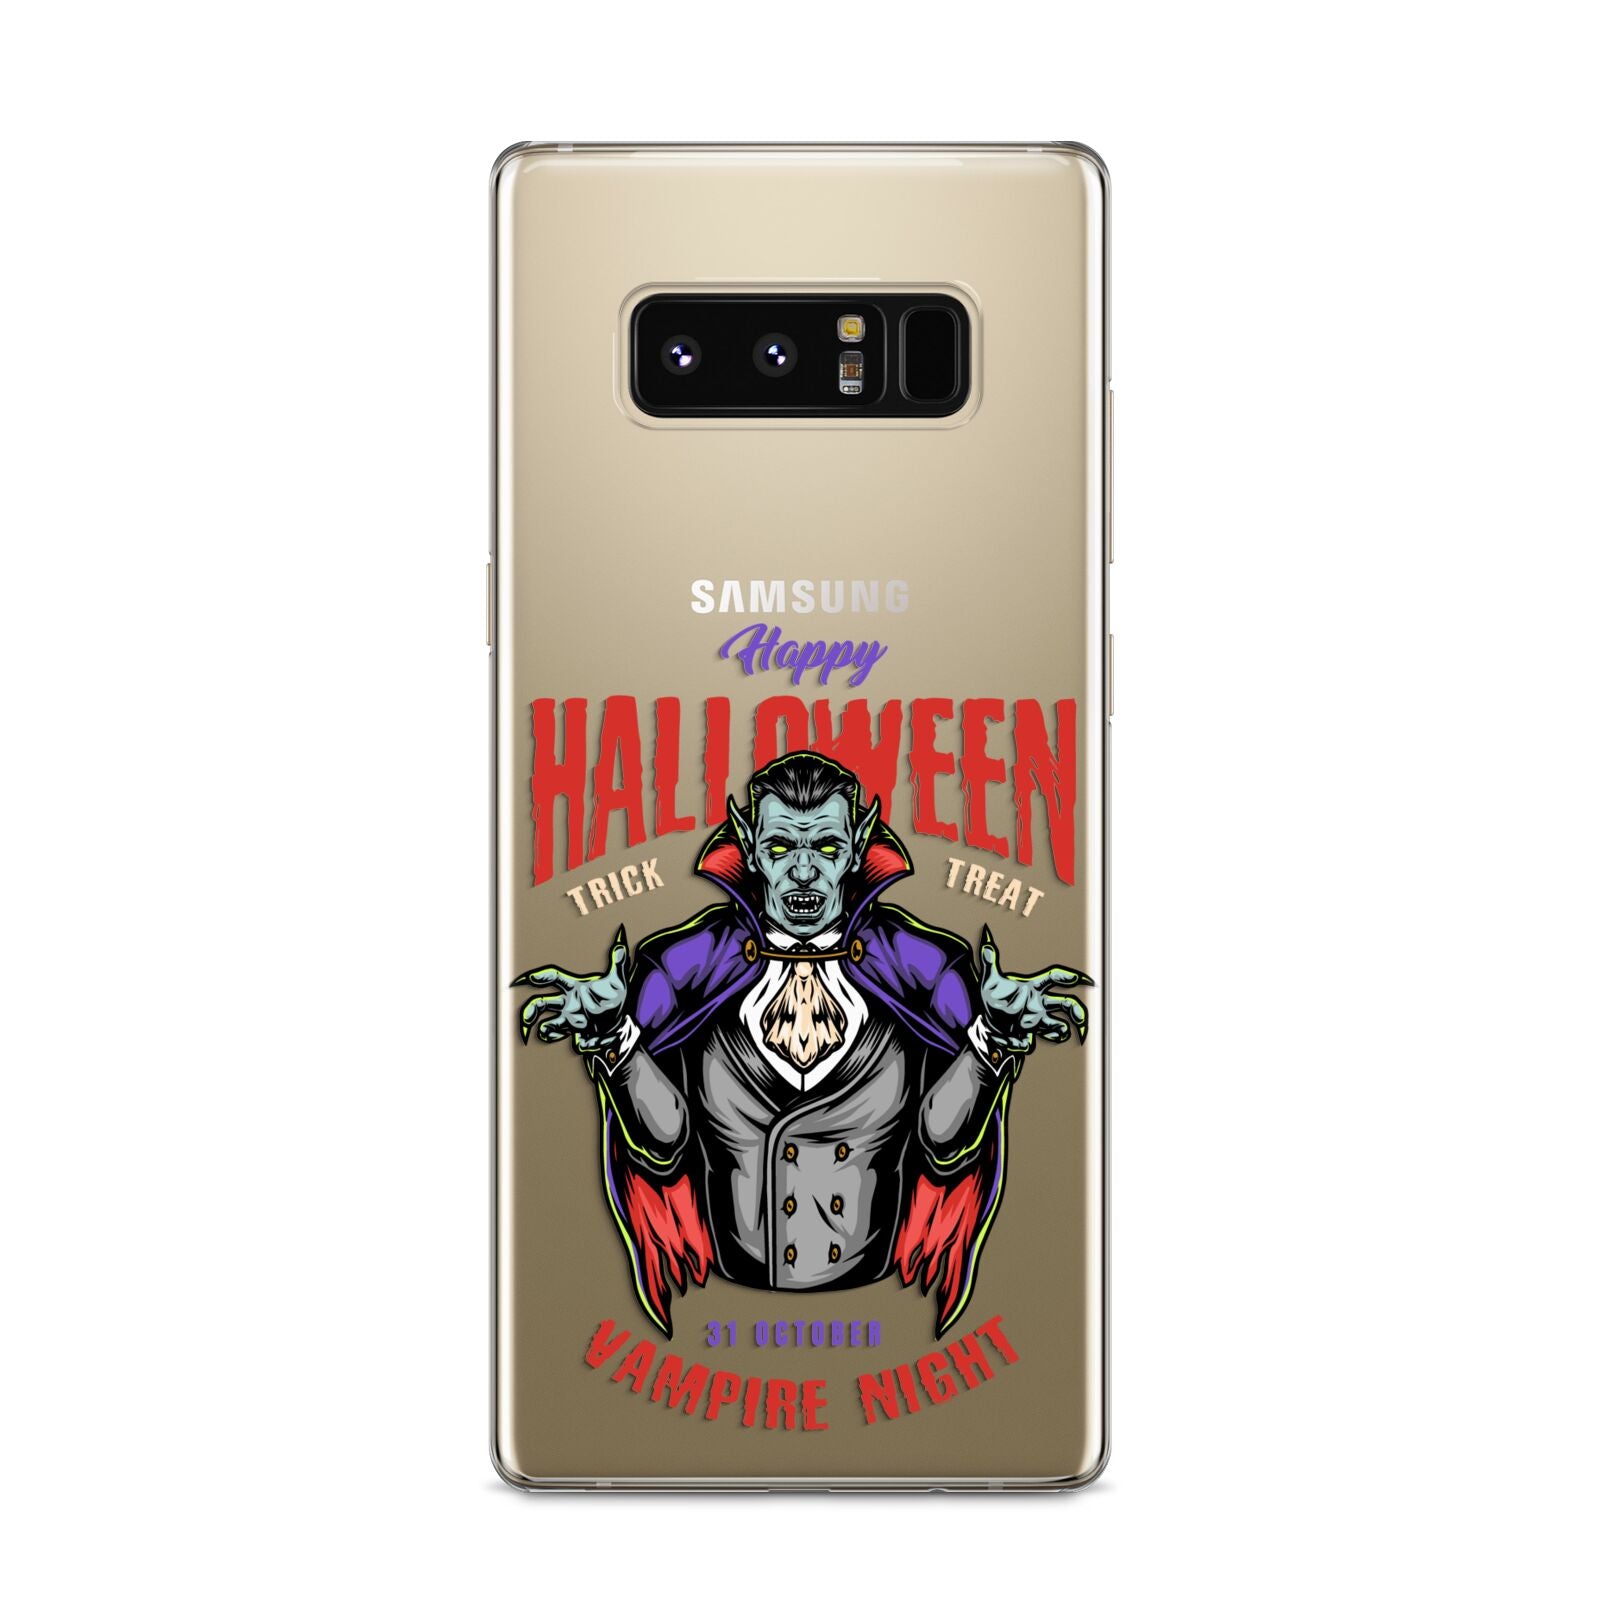 Vampire Night Samsung Galaxy S8 Case